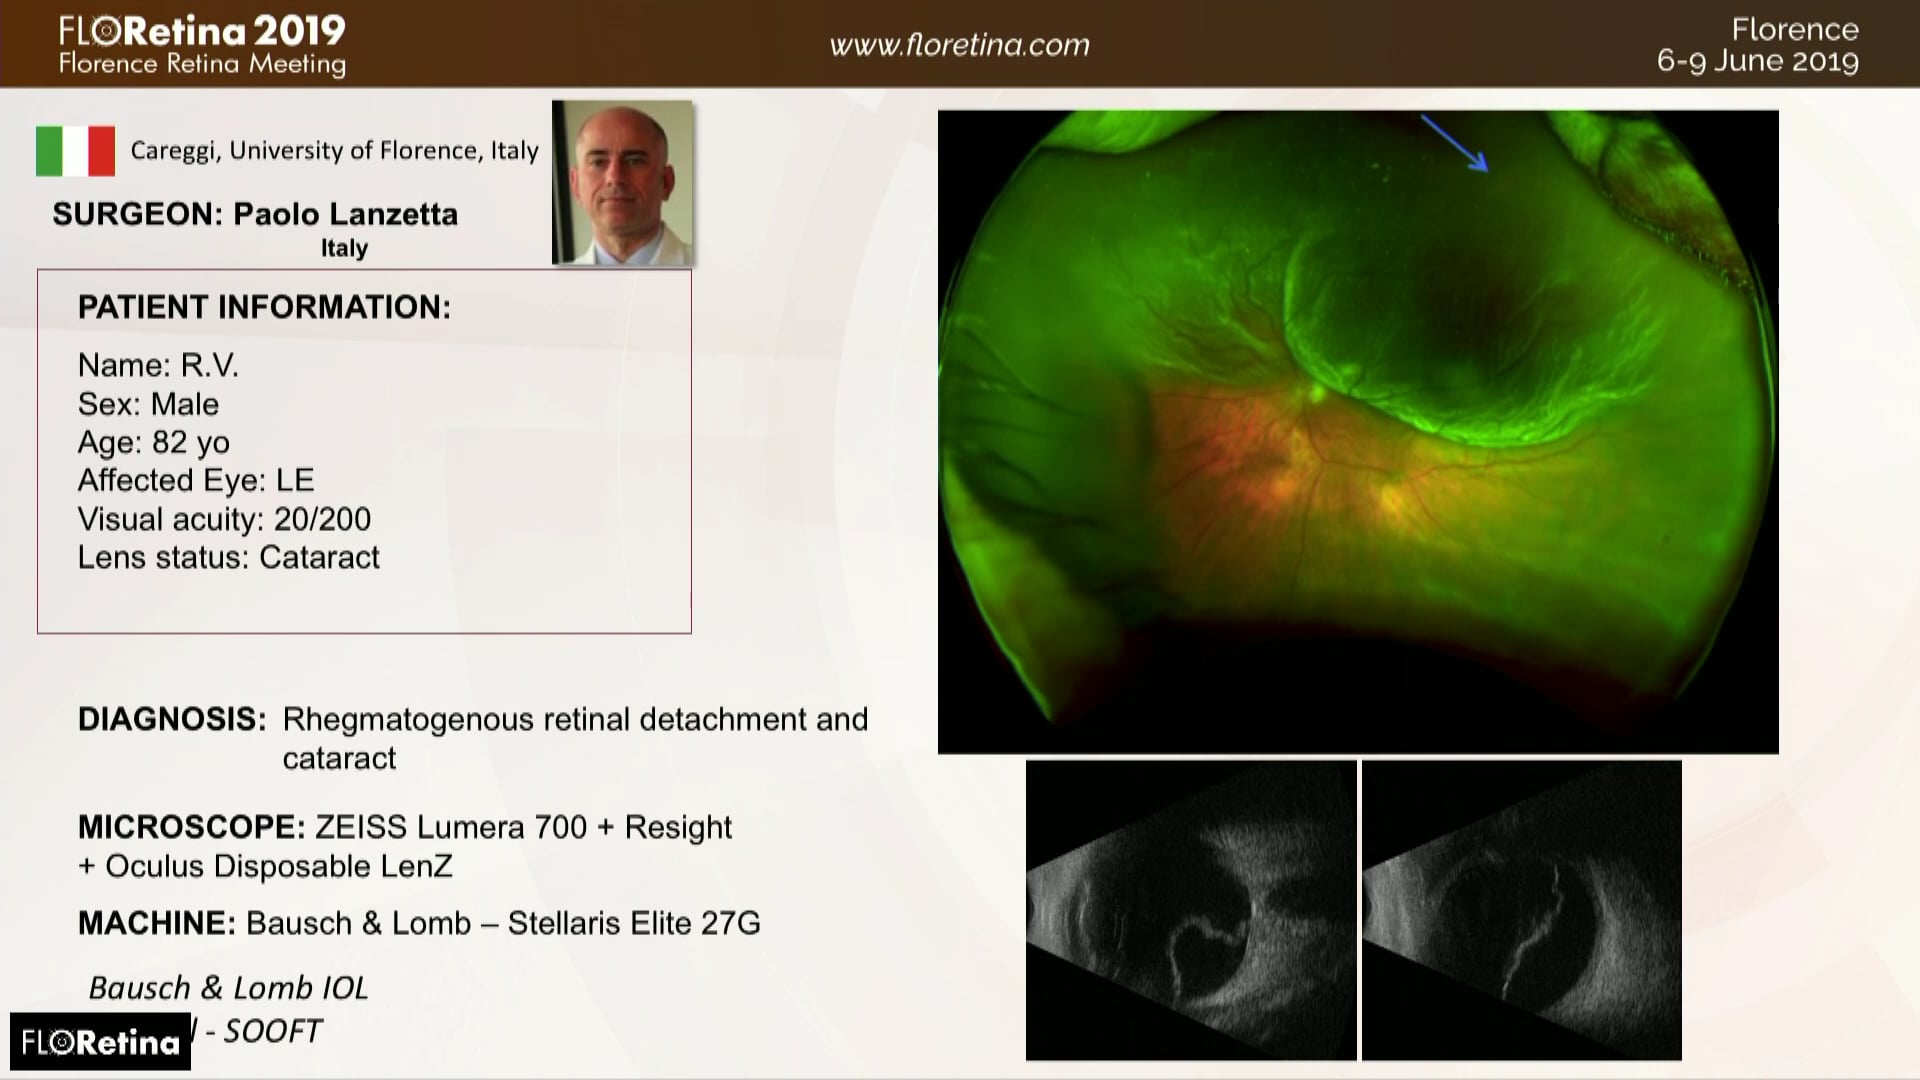 Rhegmatogenous Retinal Detachment and Cataract